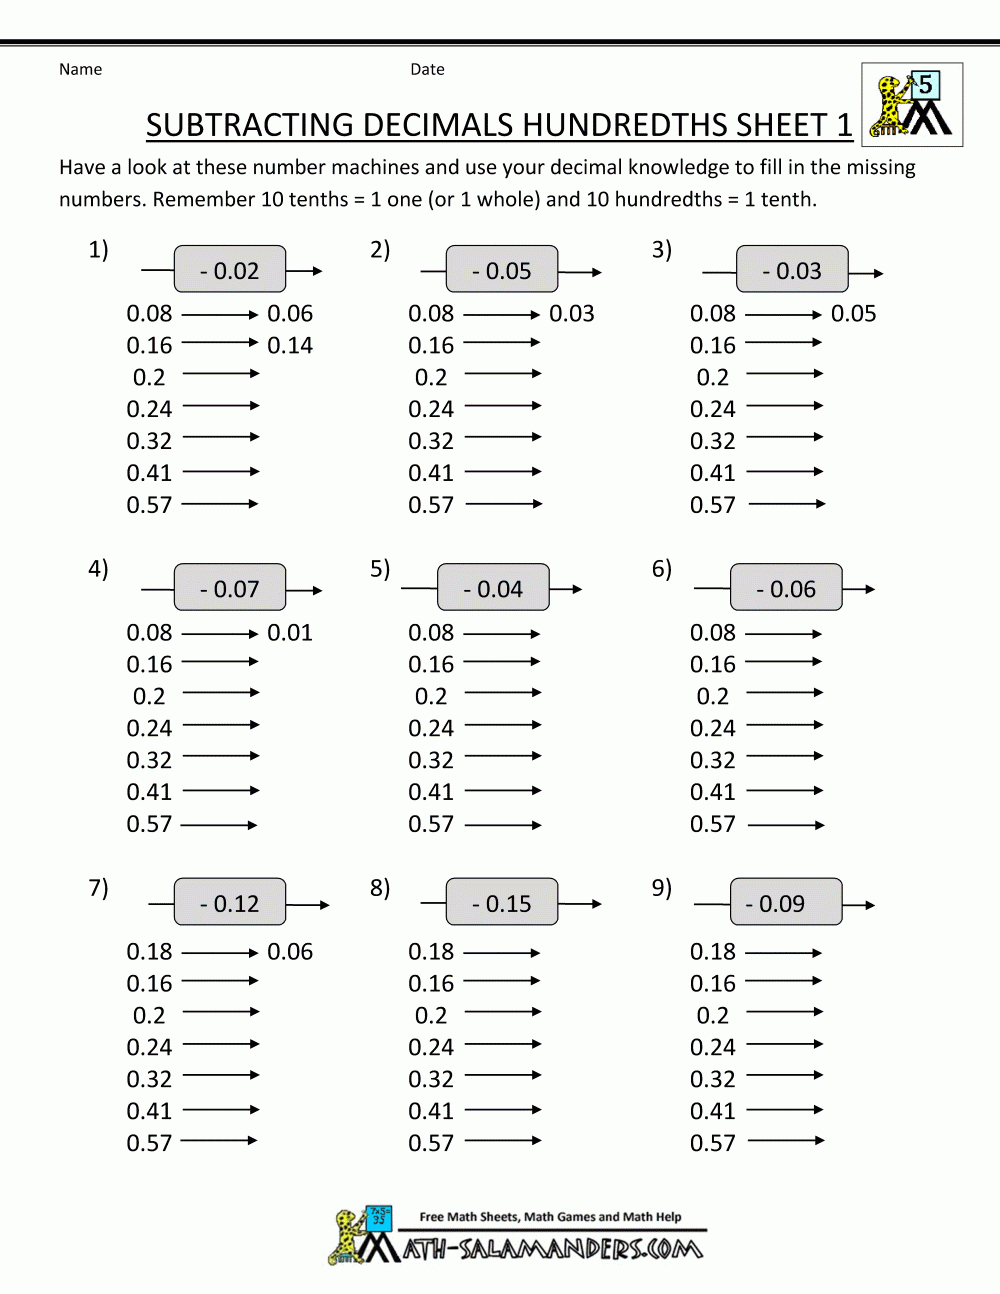 Printable Multiplication Sprints PrintableMultiplication